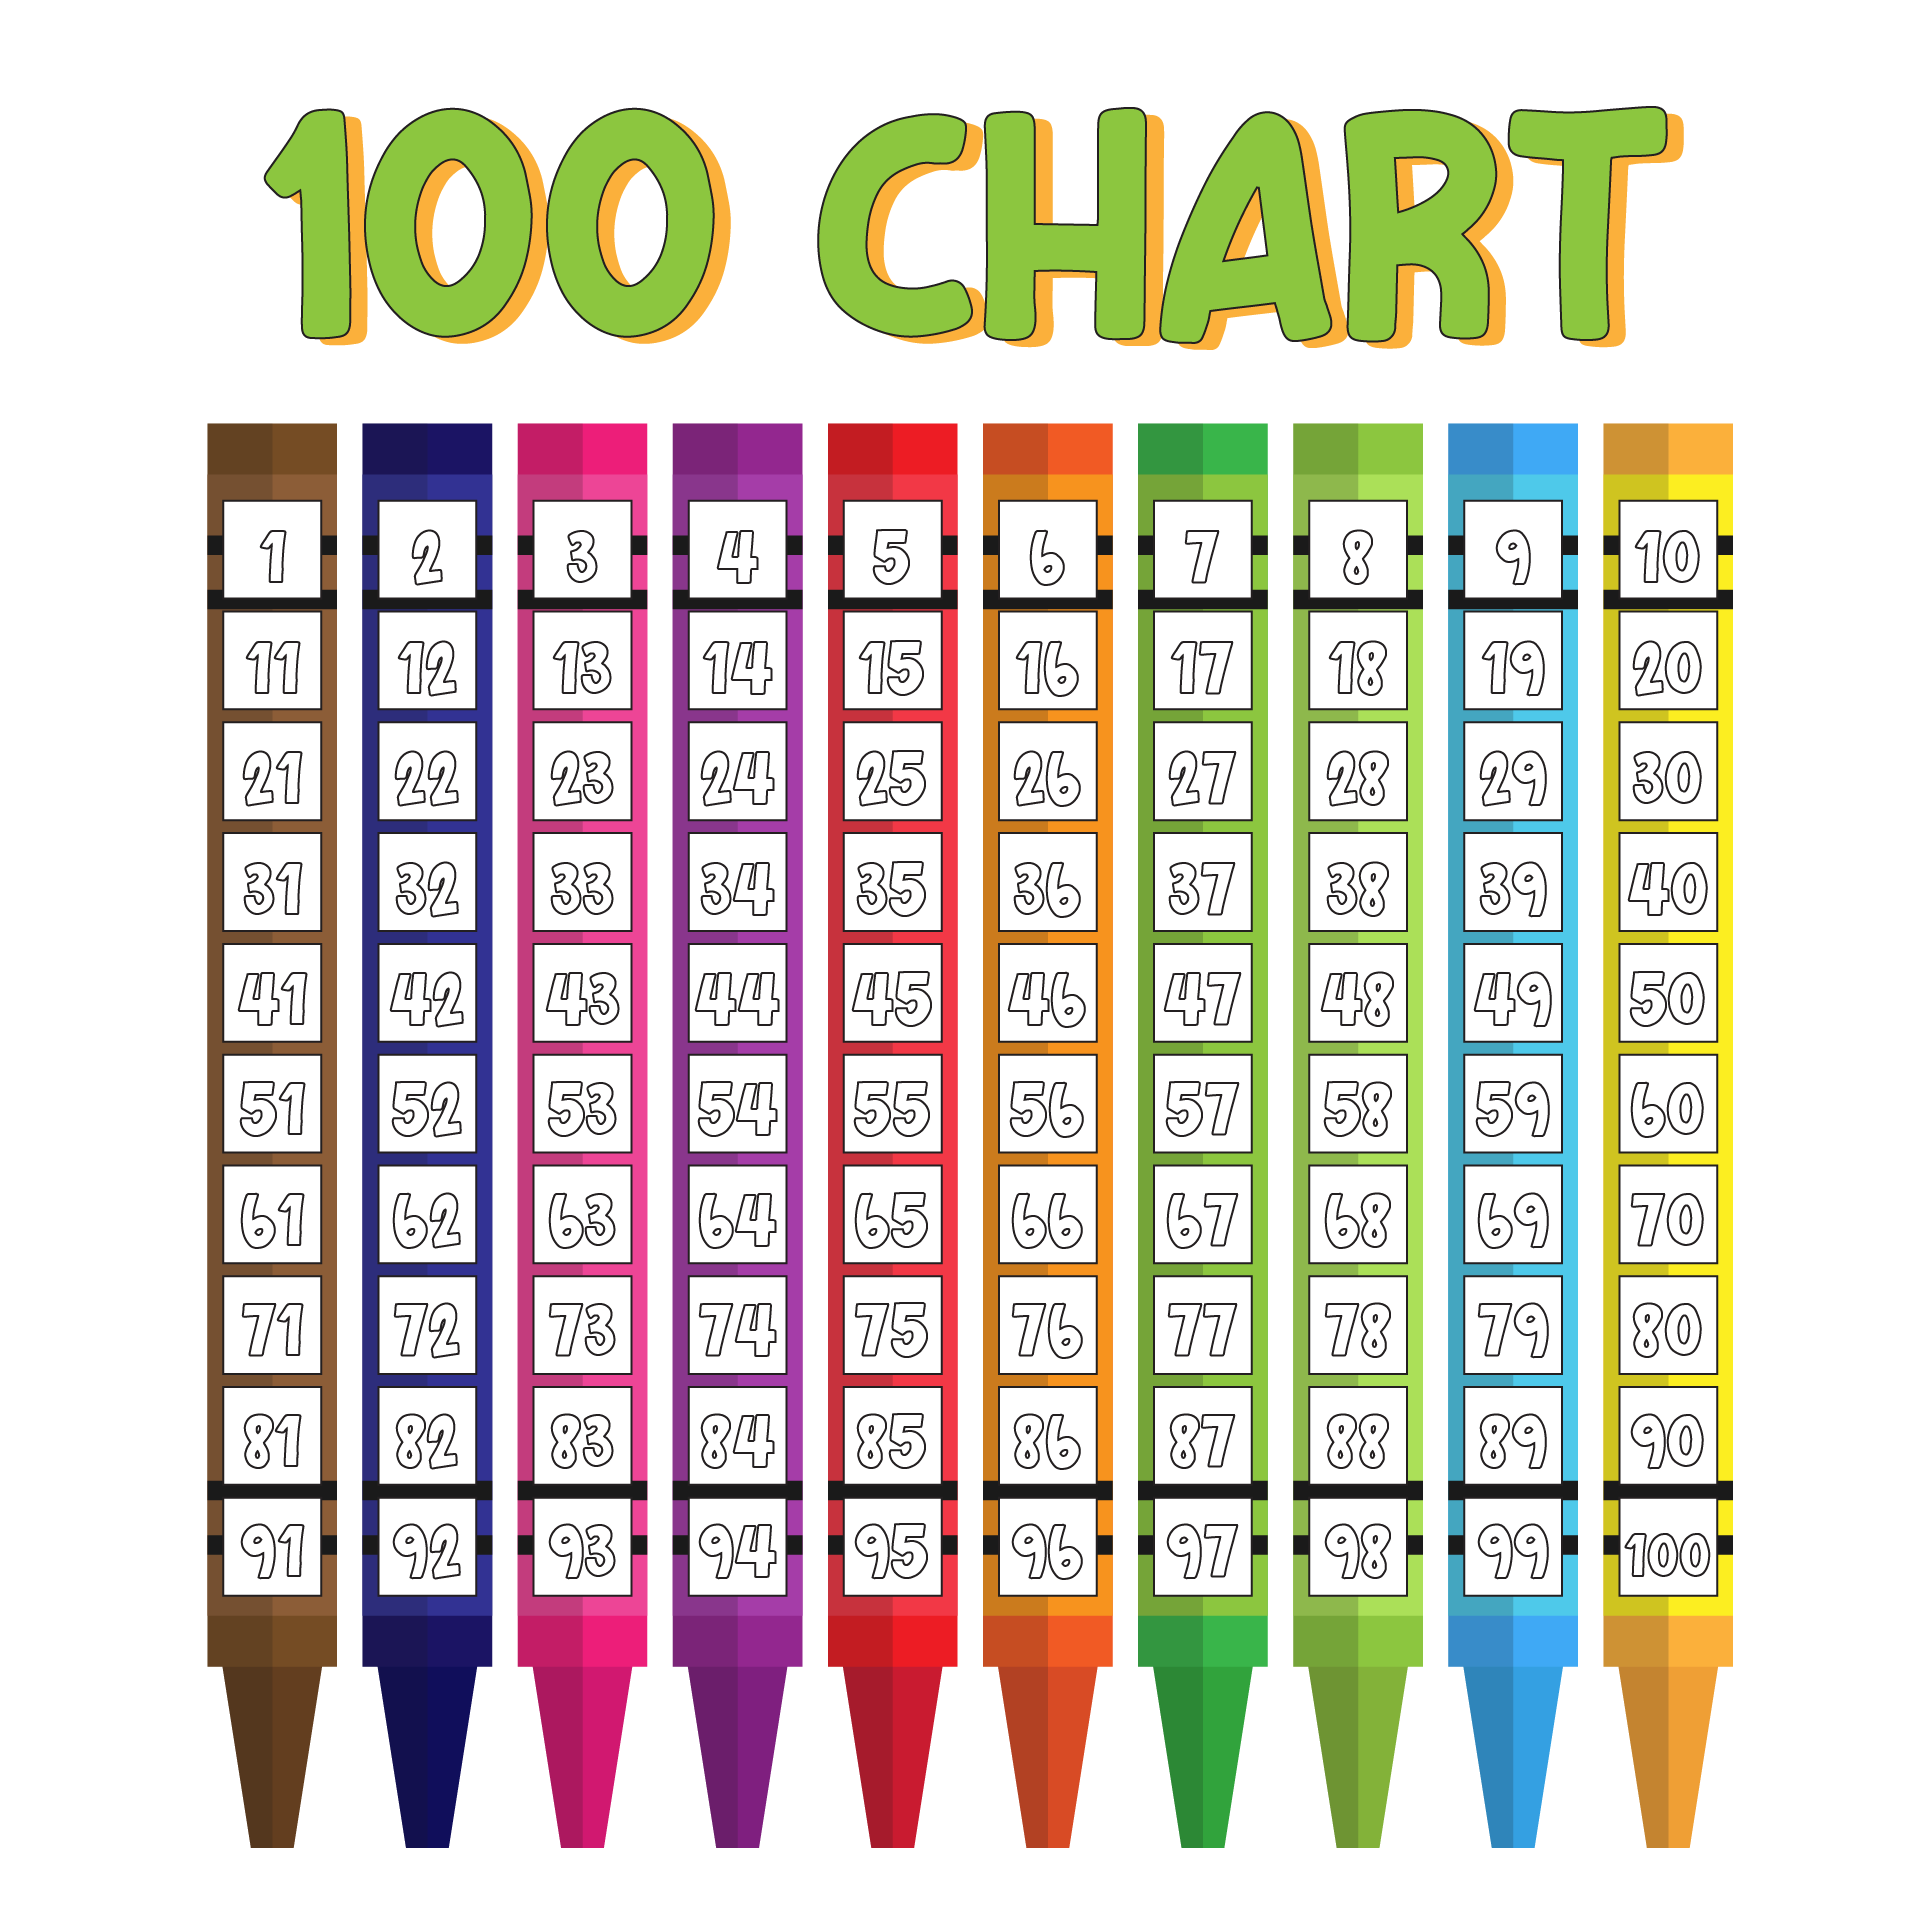 10 Best Hundreds Chart Printable - printablee.com